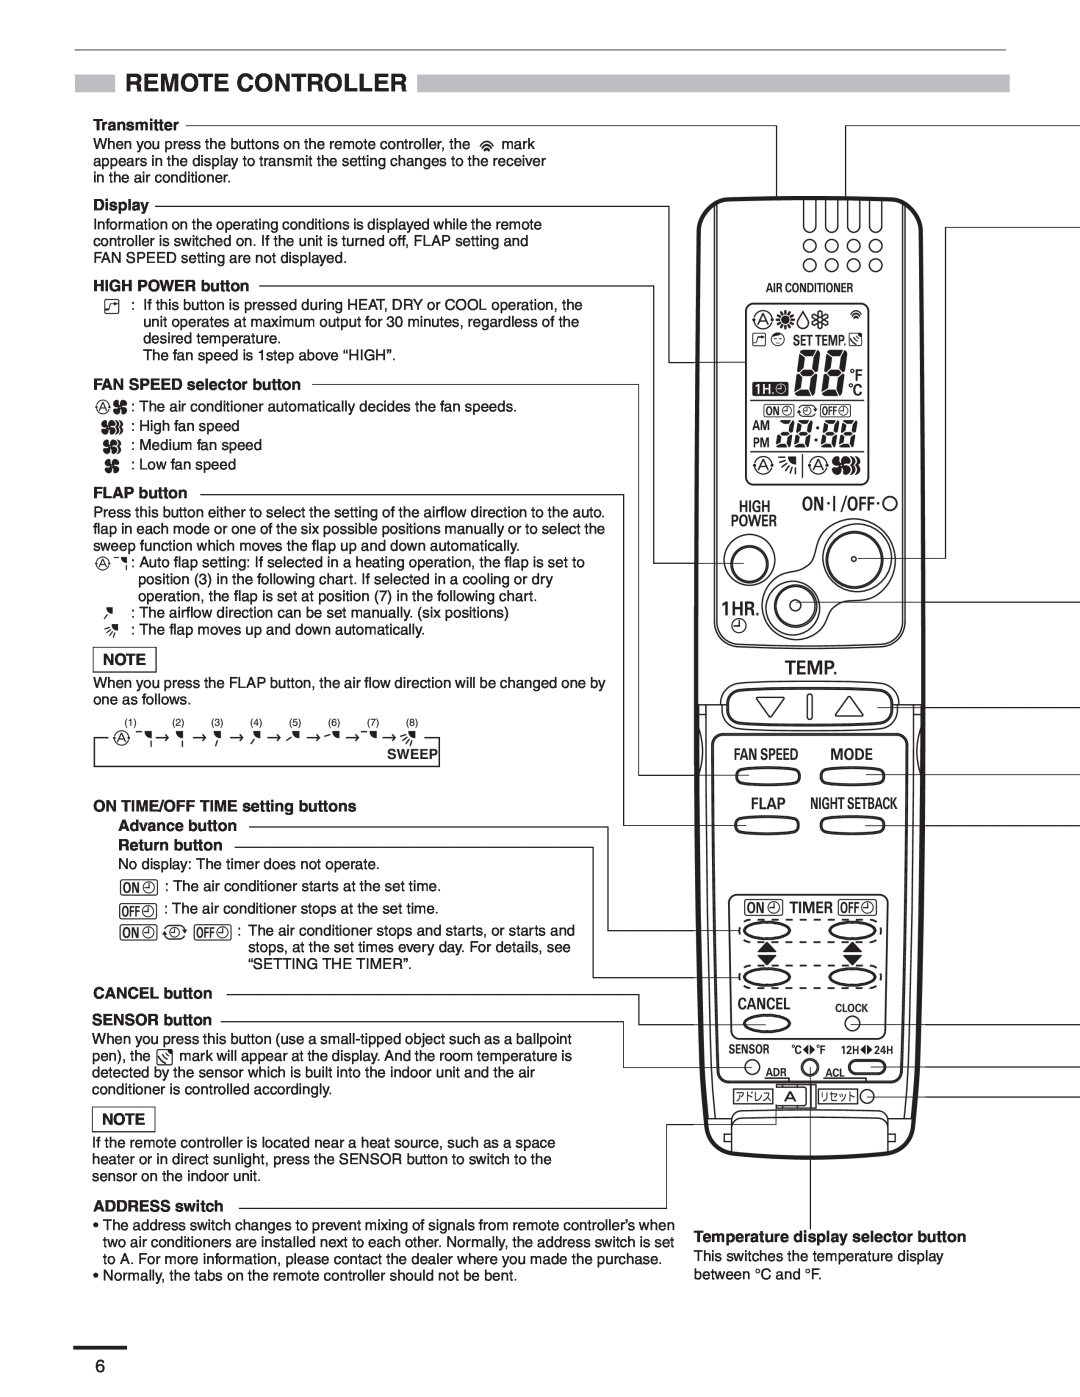 Panasonic CS-MKE12NB4U Remote Controller, Transmitter, Display, HIGH POWER button, FAN SPEED selector button, FLAP button 